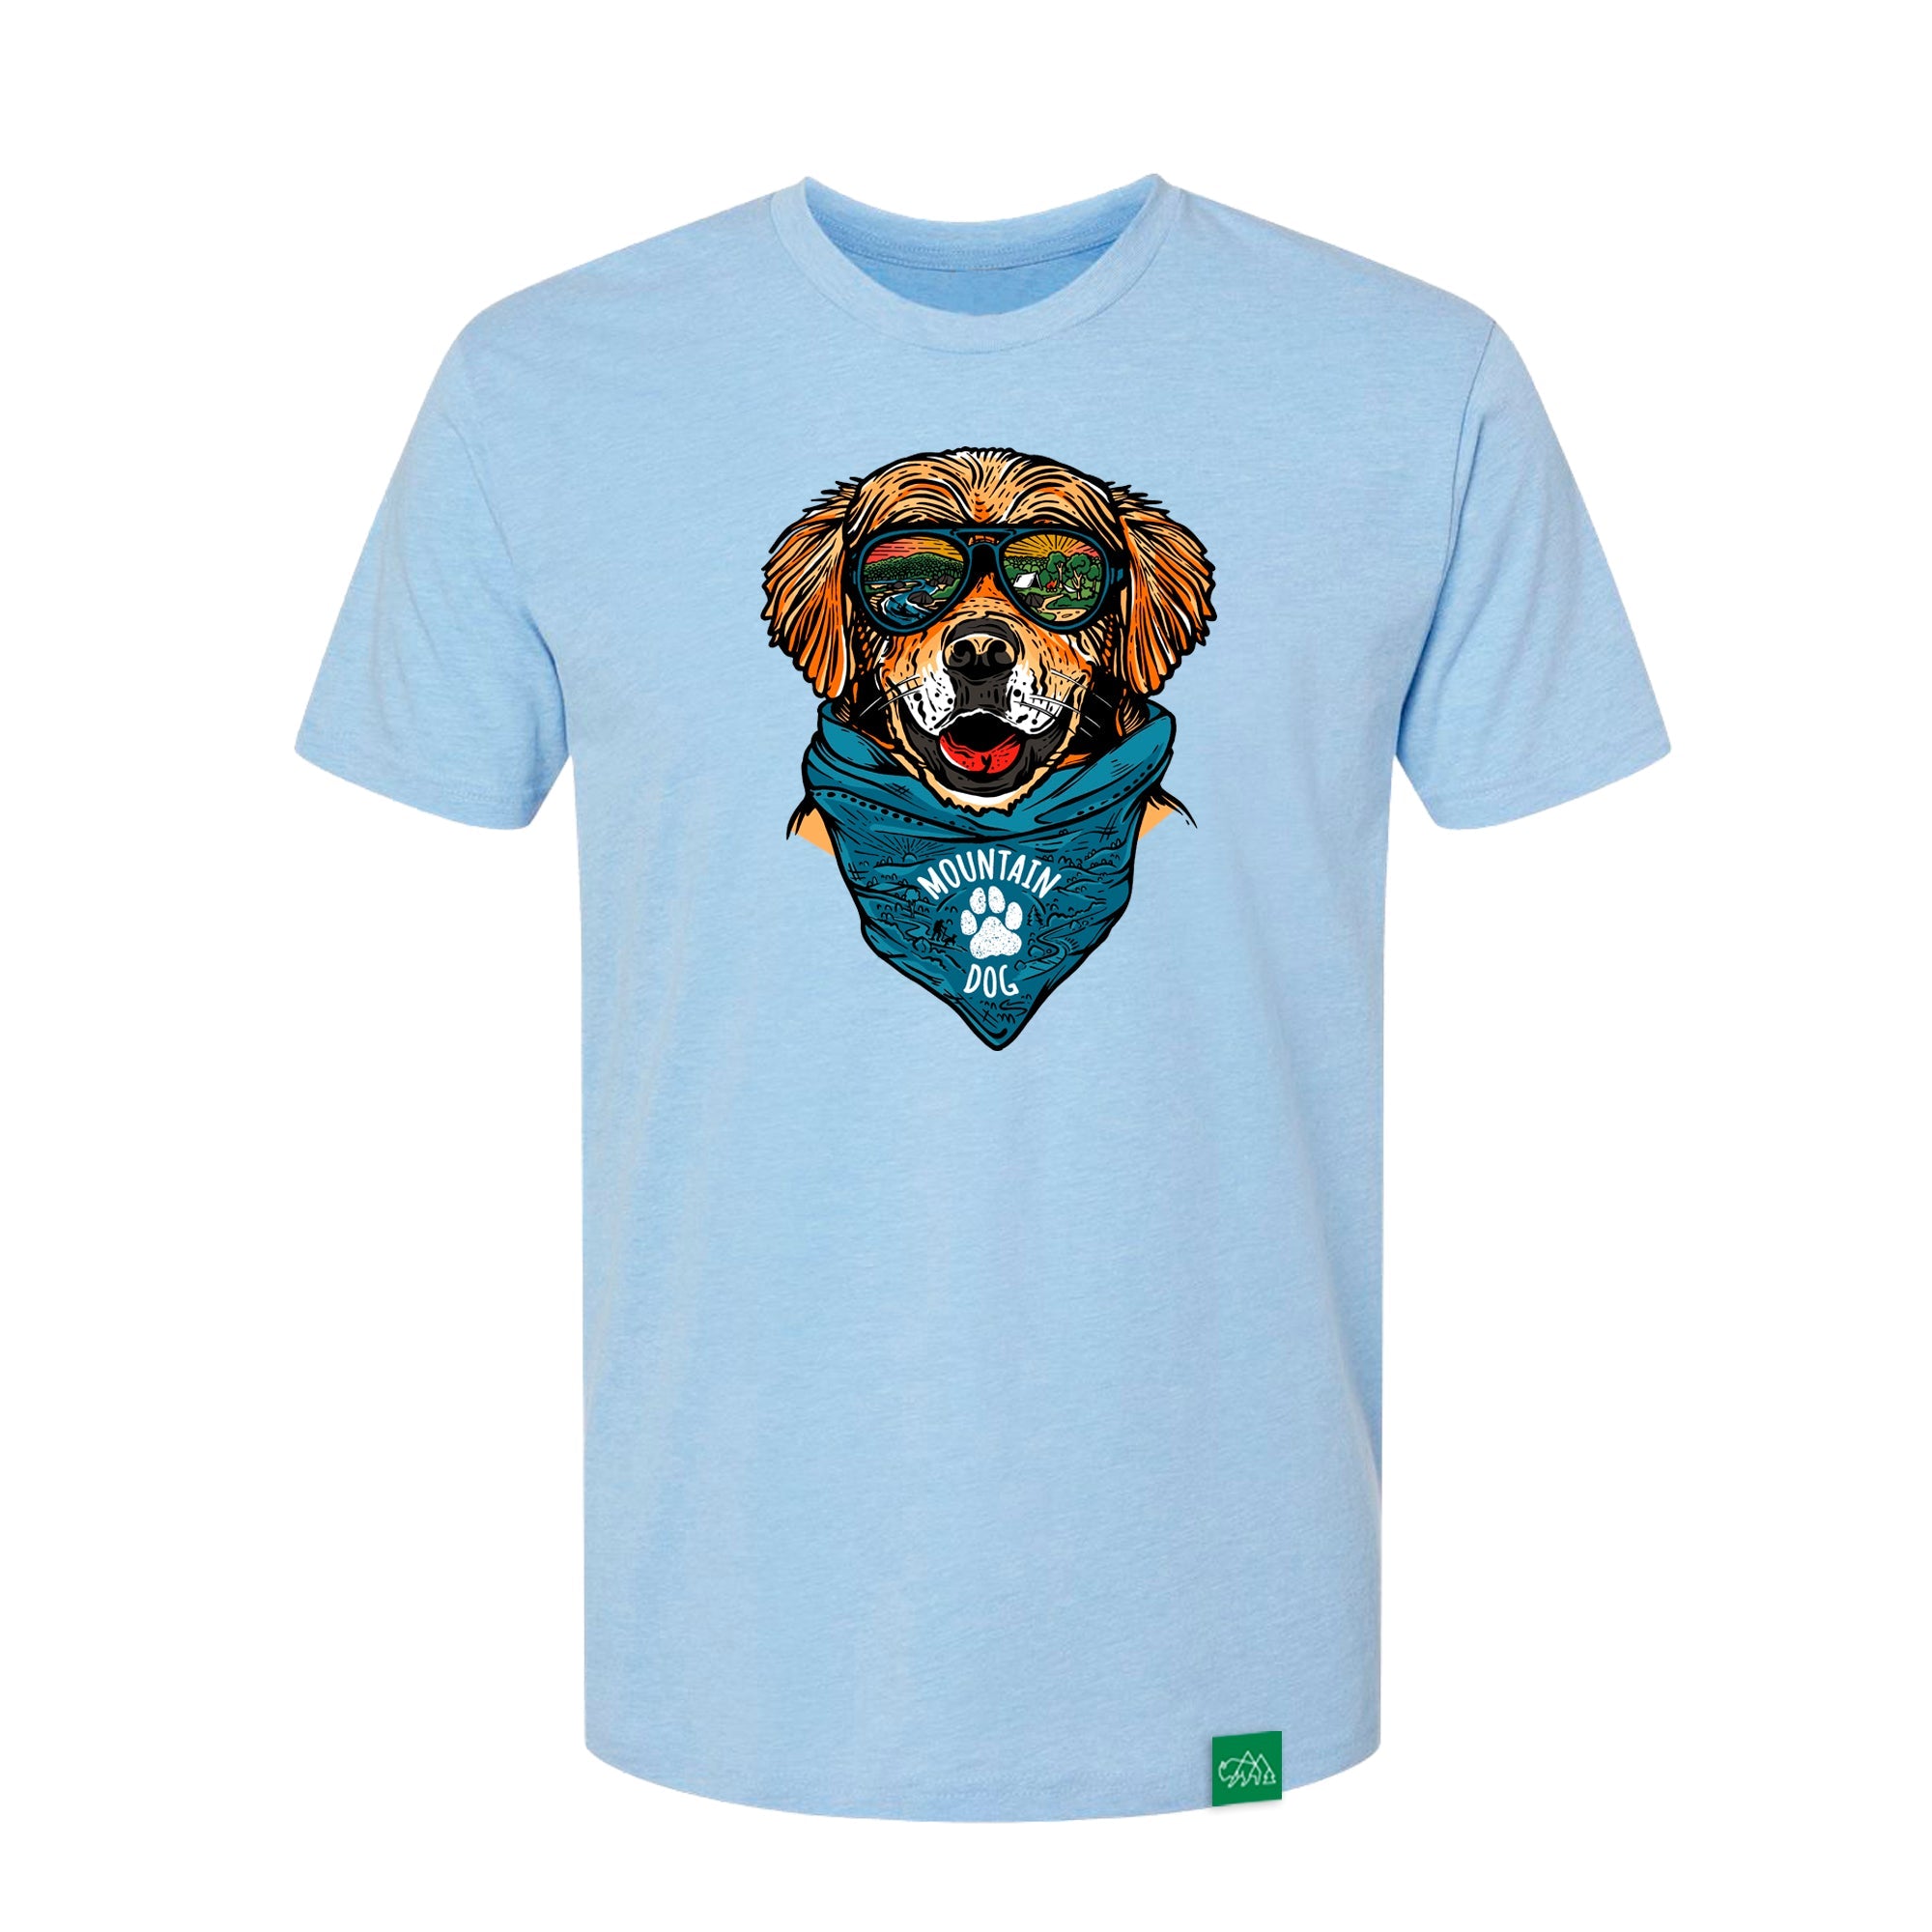 Maximus the Mountain Dog T-Shirt